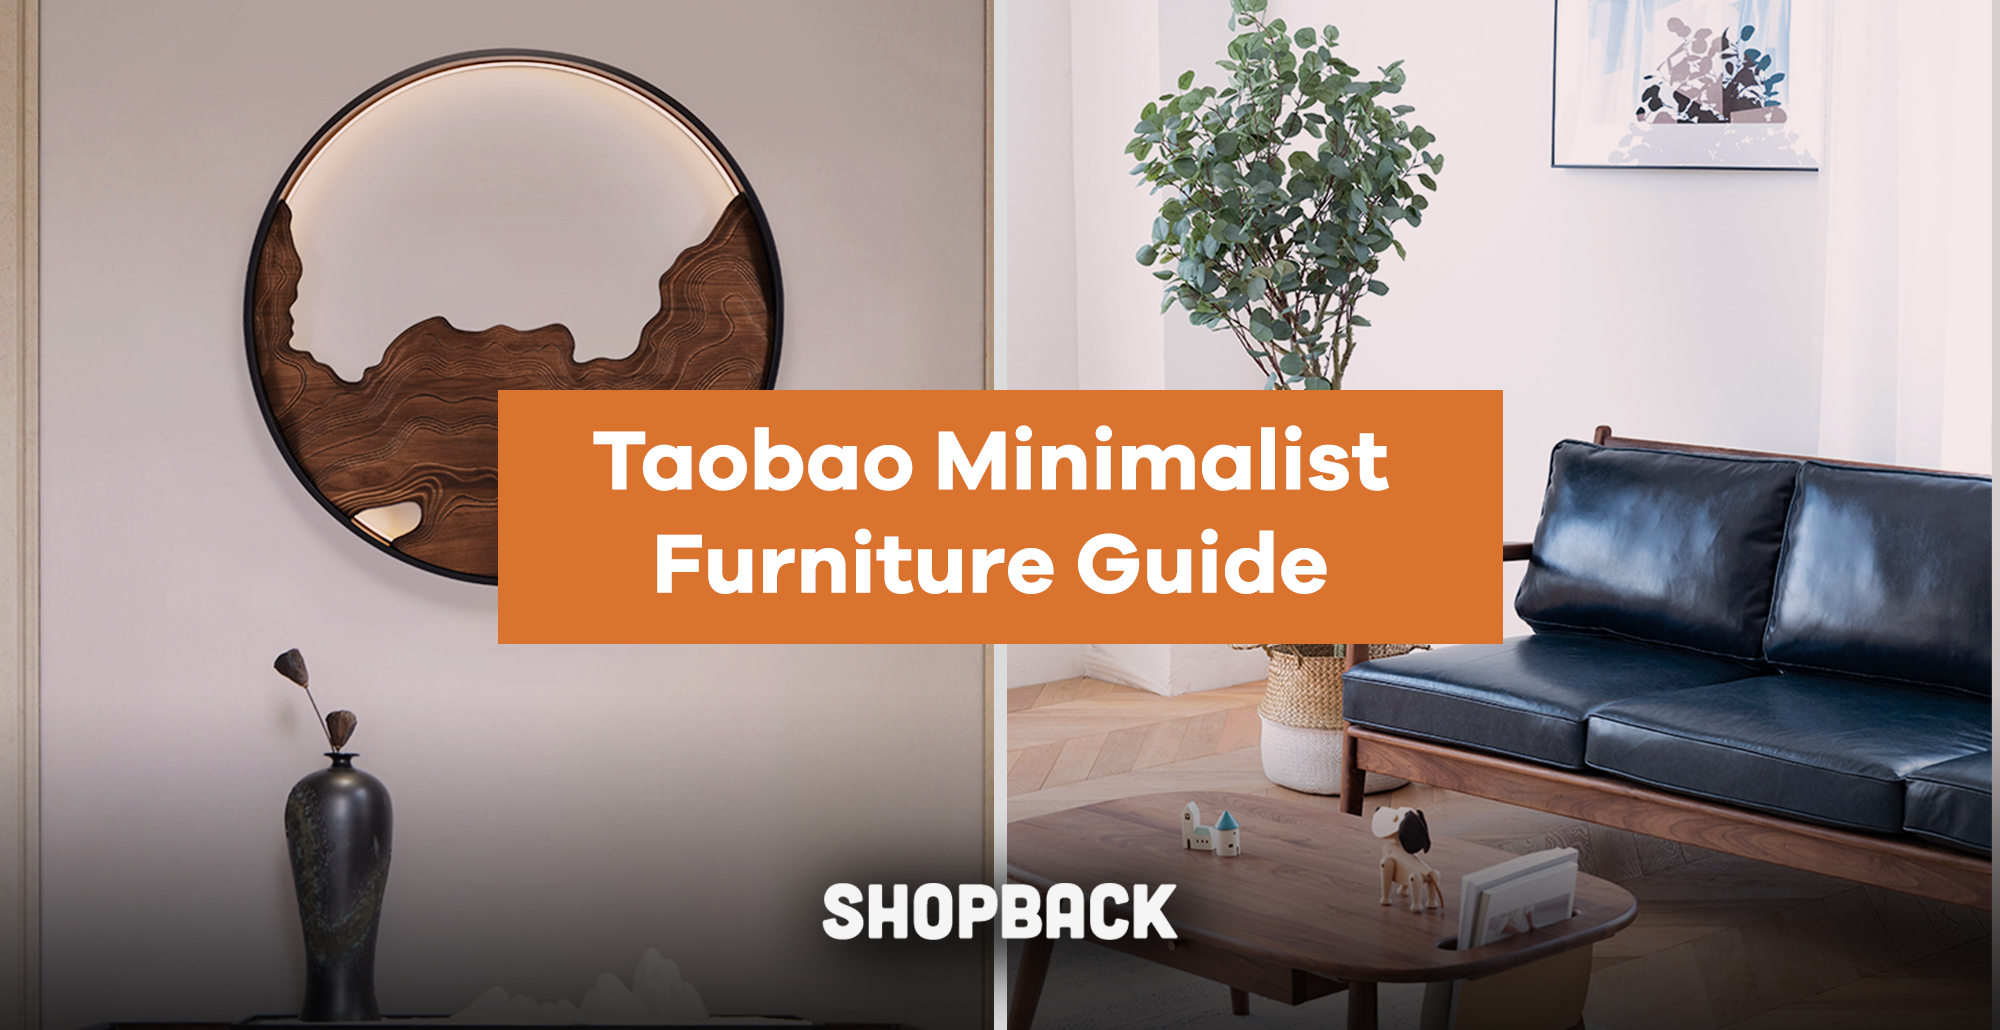 Your Taobao Minimalist Furniture Guide